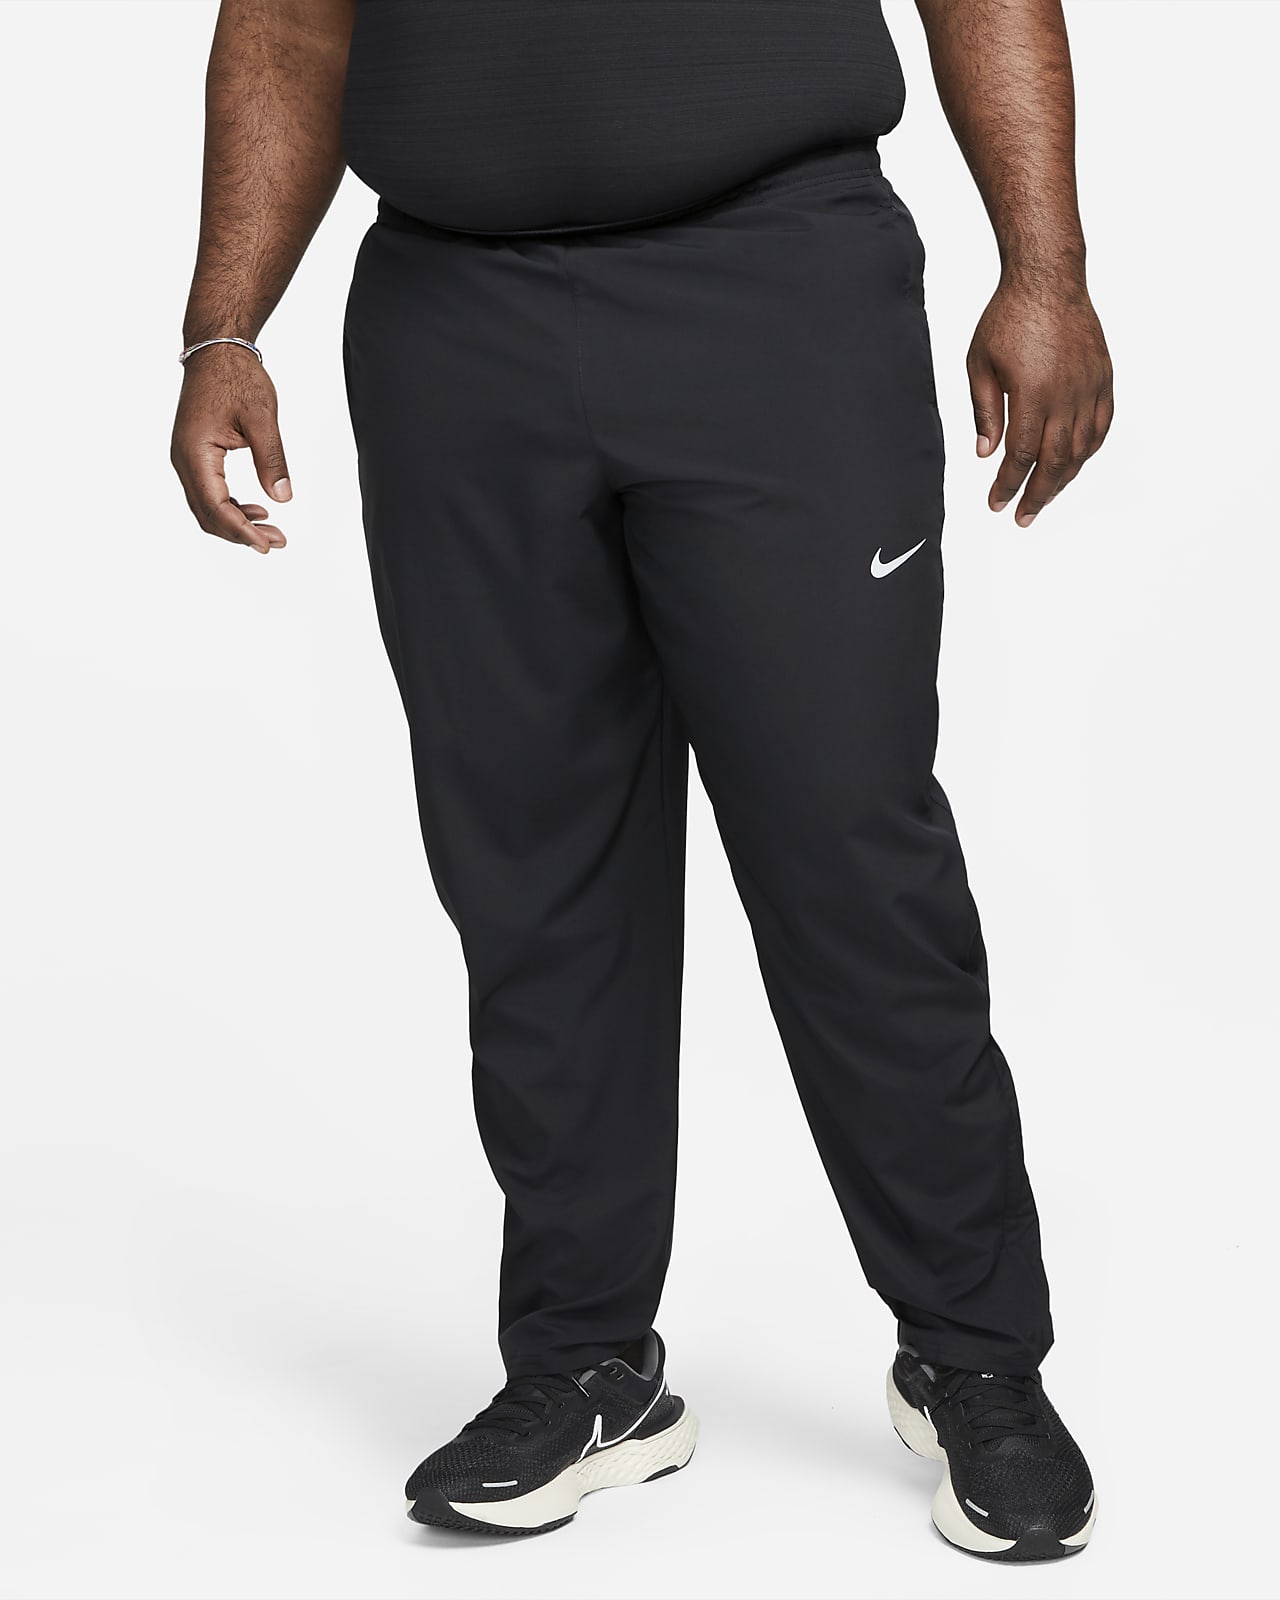 Nike Men's Woven Running LU